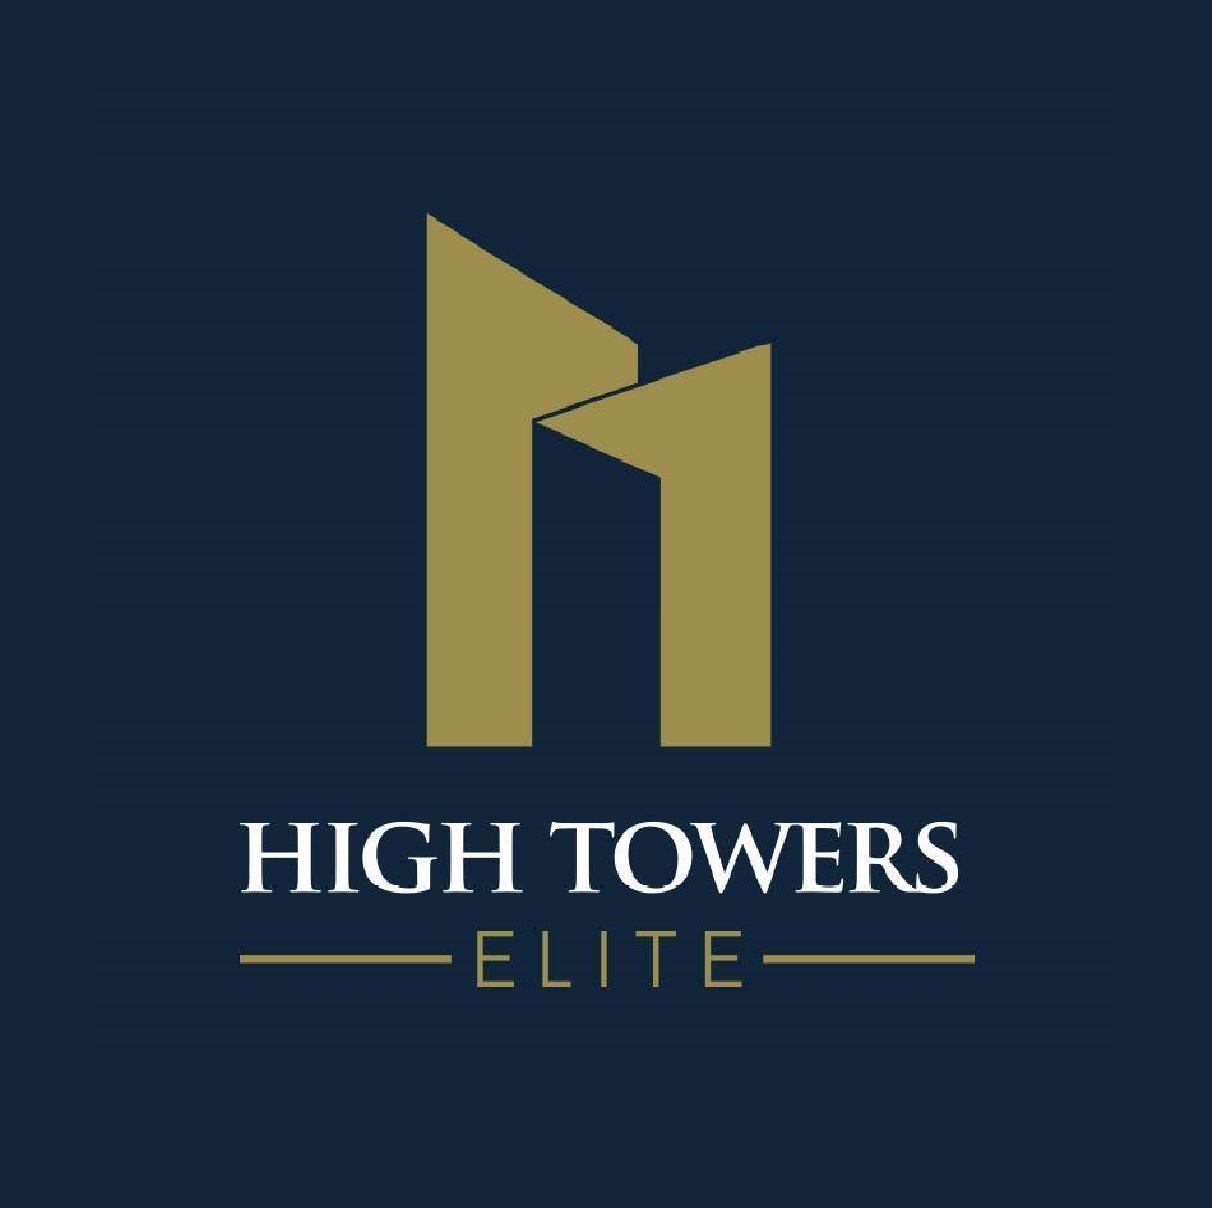 High towers